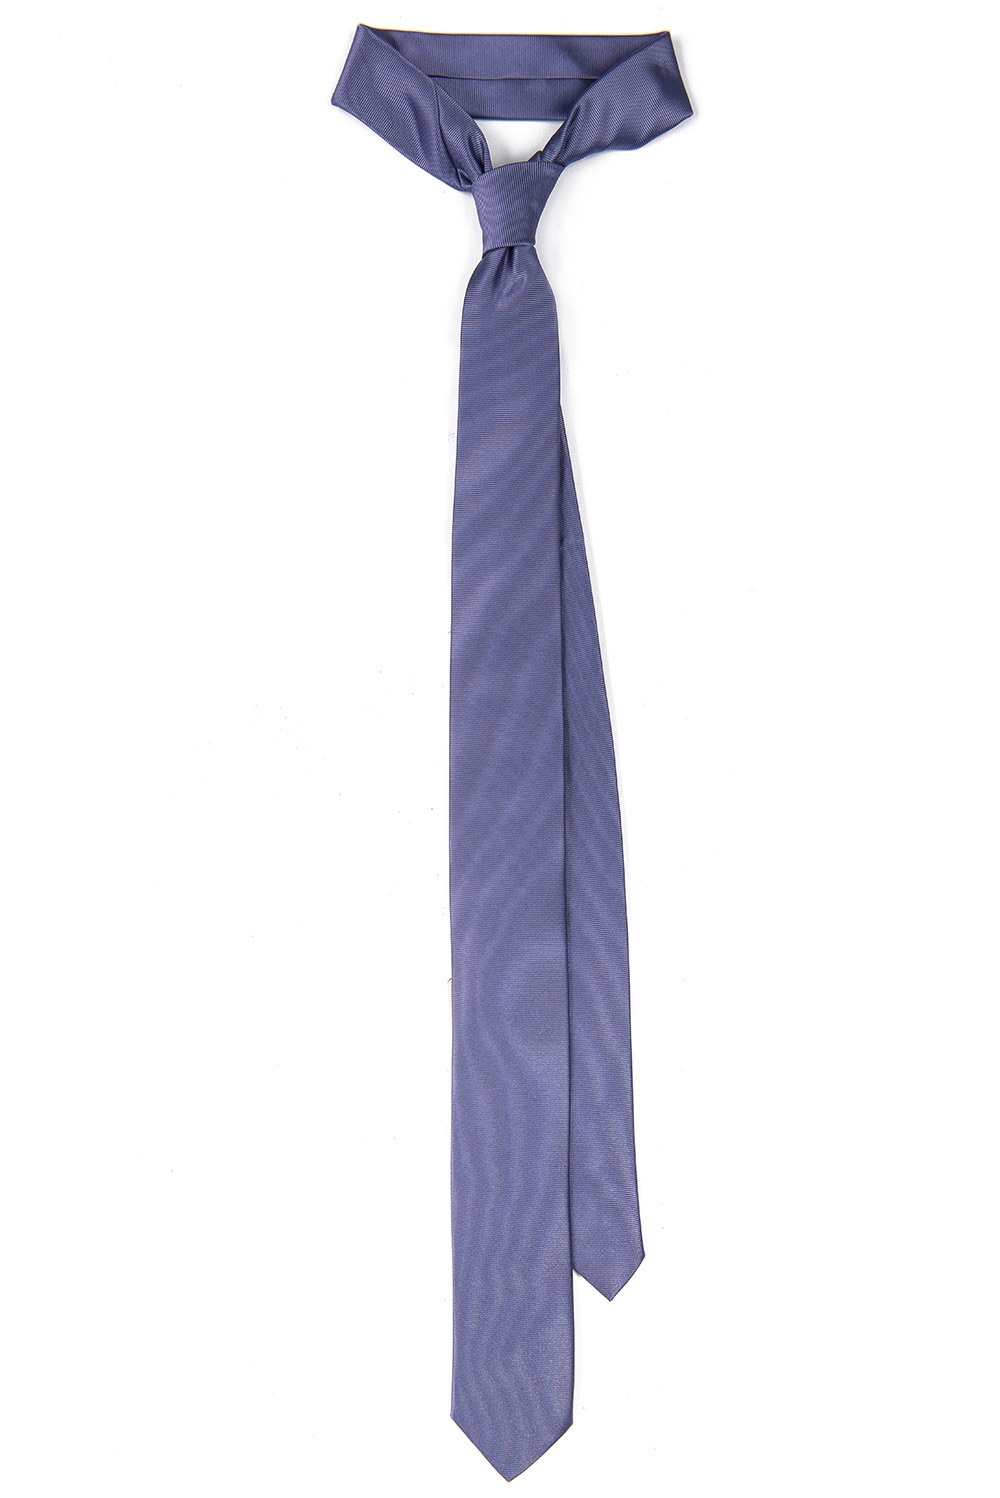 Cravata poliester lila structuri bradut 0